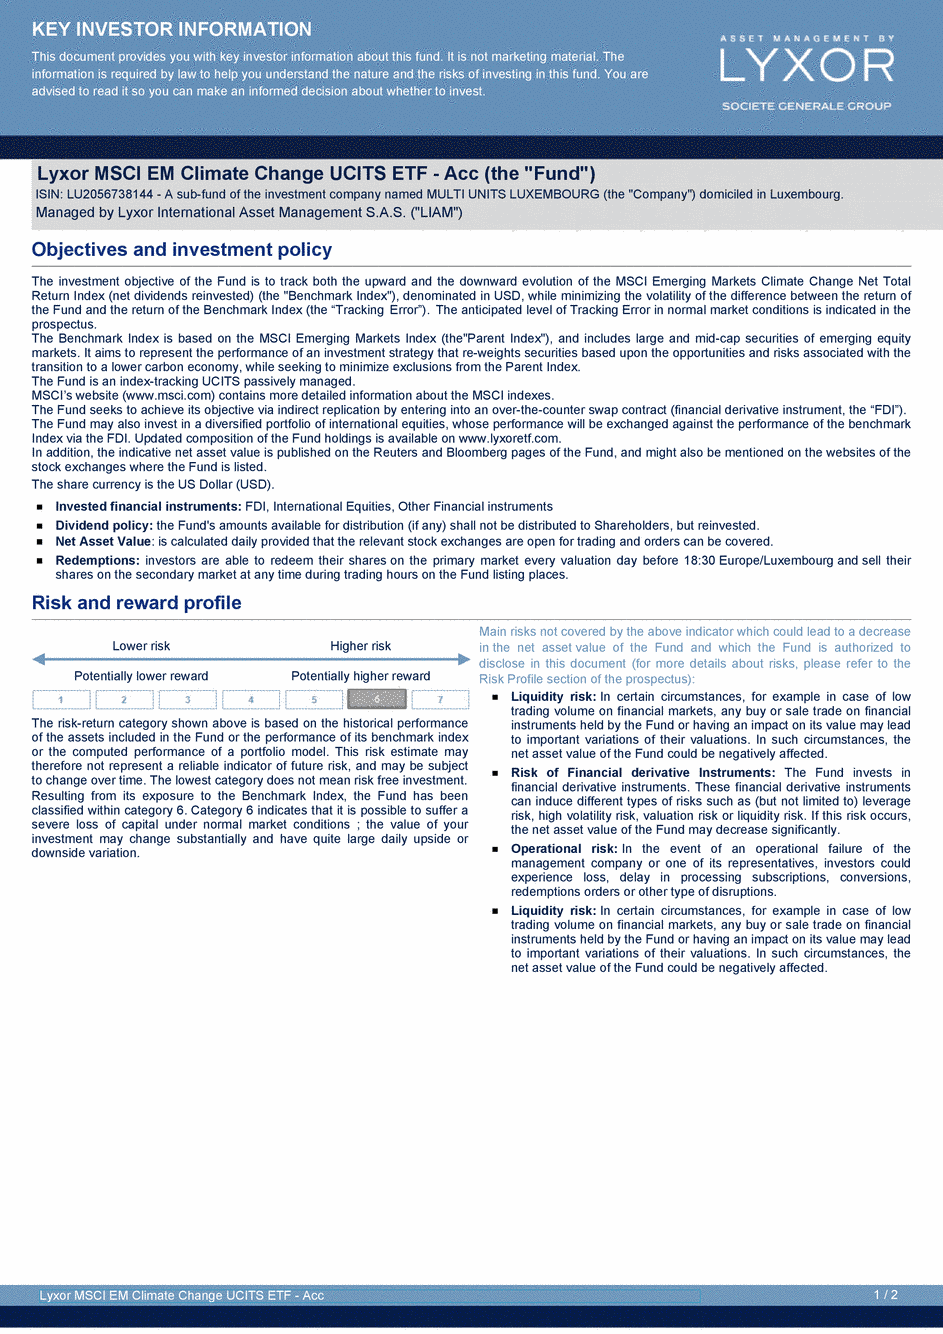 DICI Lyxor MSCI EM Climate Change UCITS ETF - Acc - 25/03/2020 - Anglais